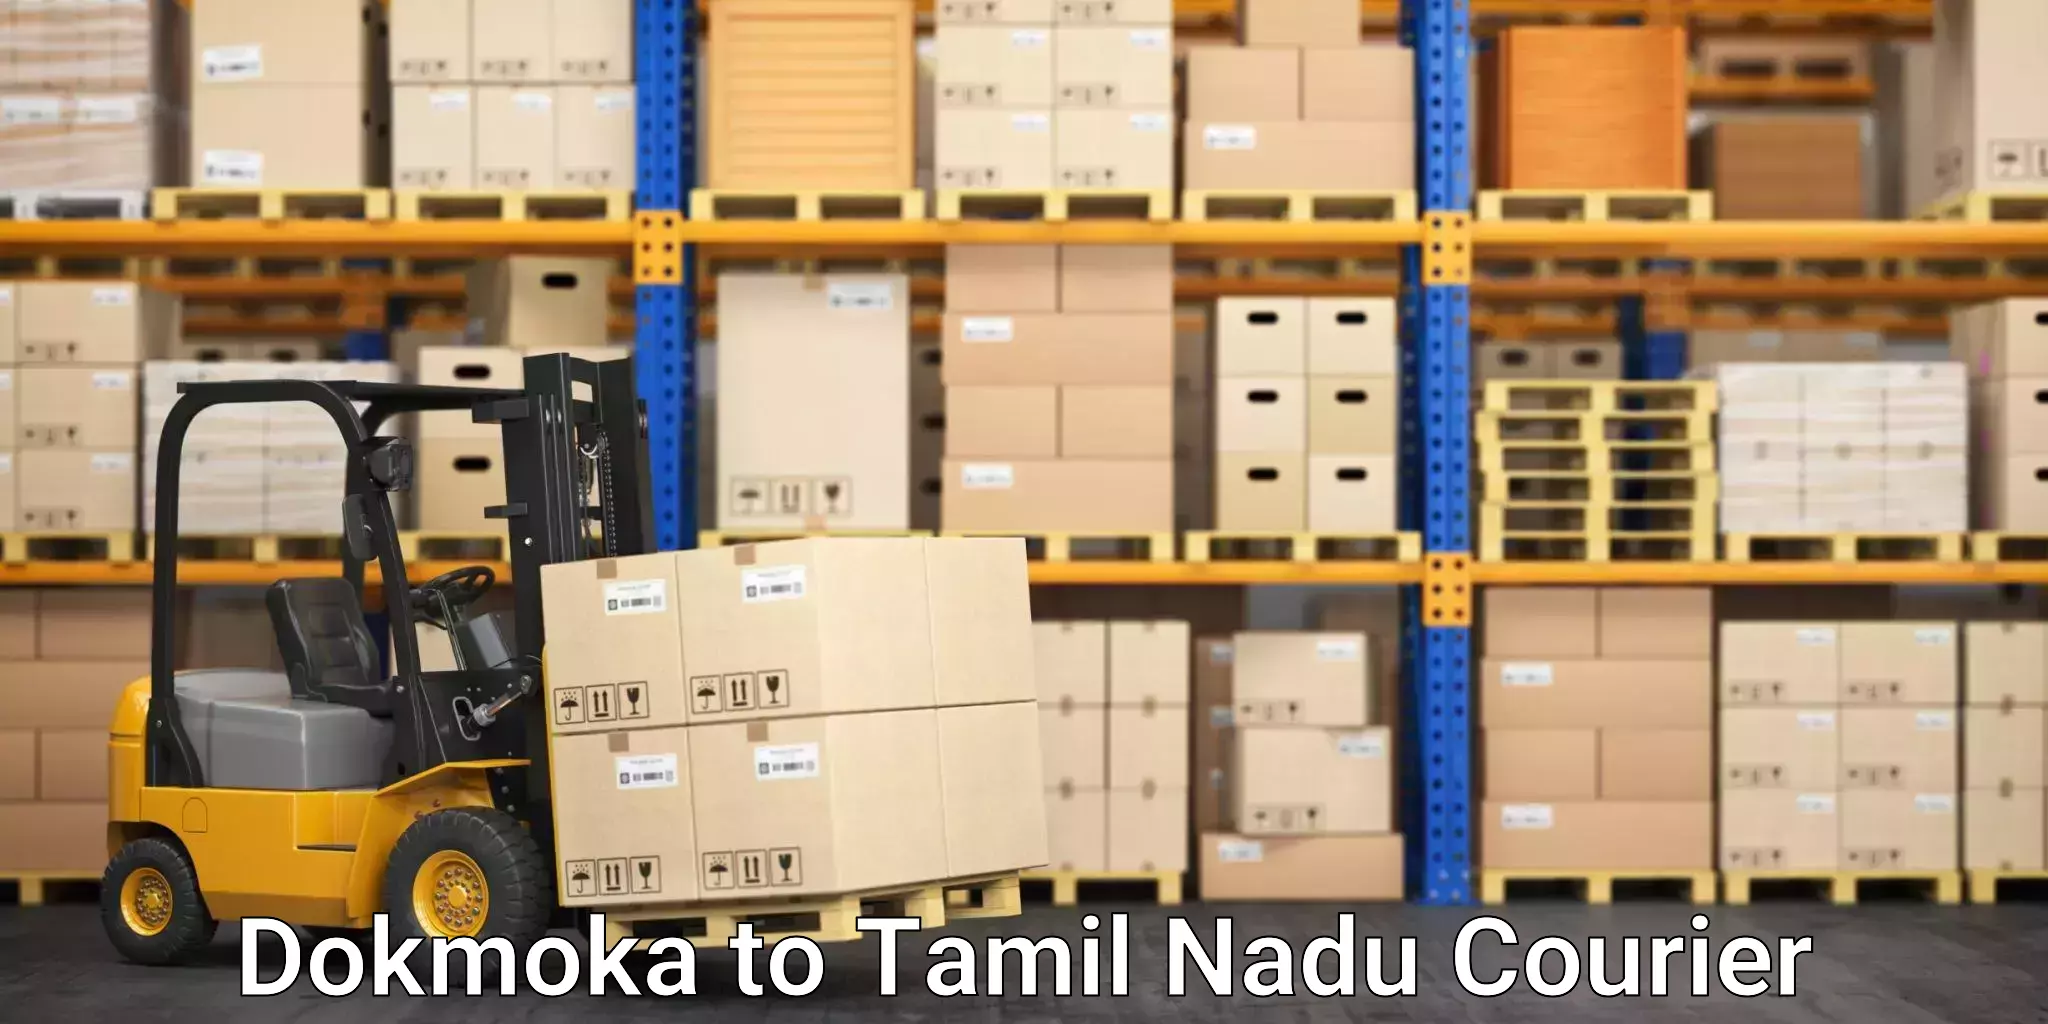 Digital courier platforms Dokmoka to Tamil Nadu